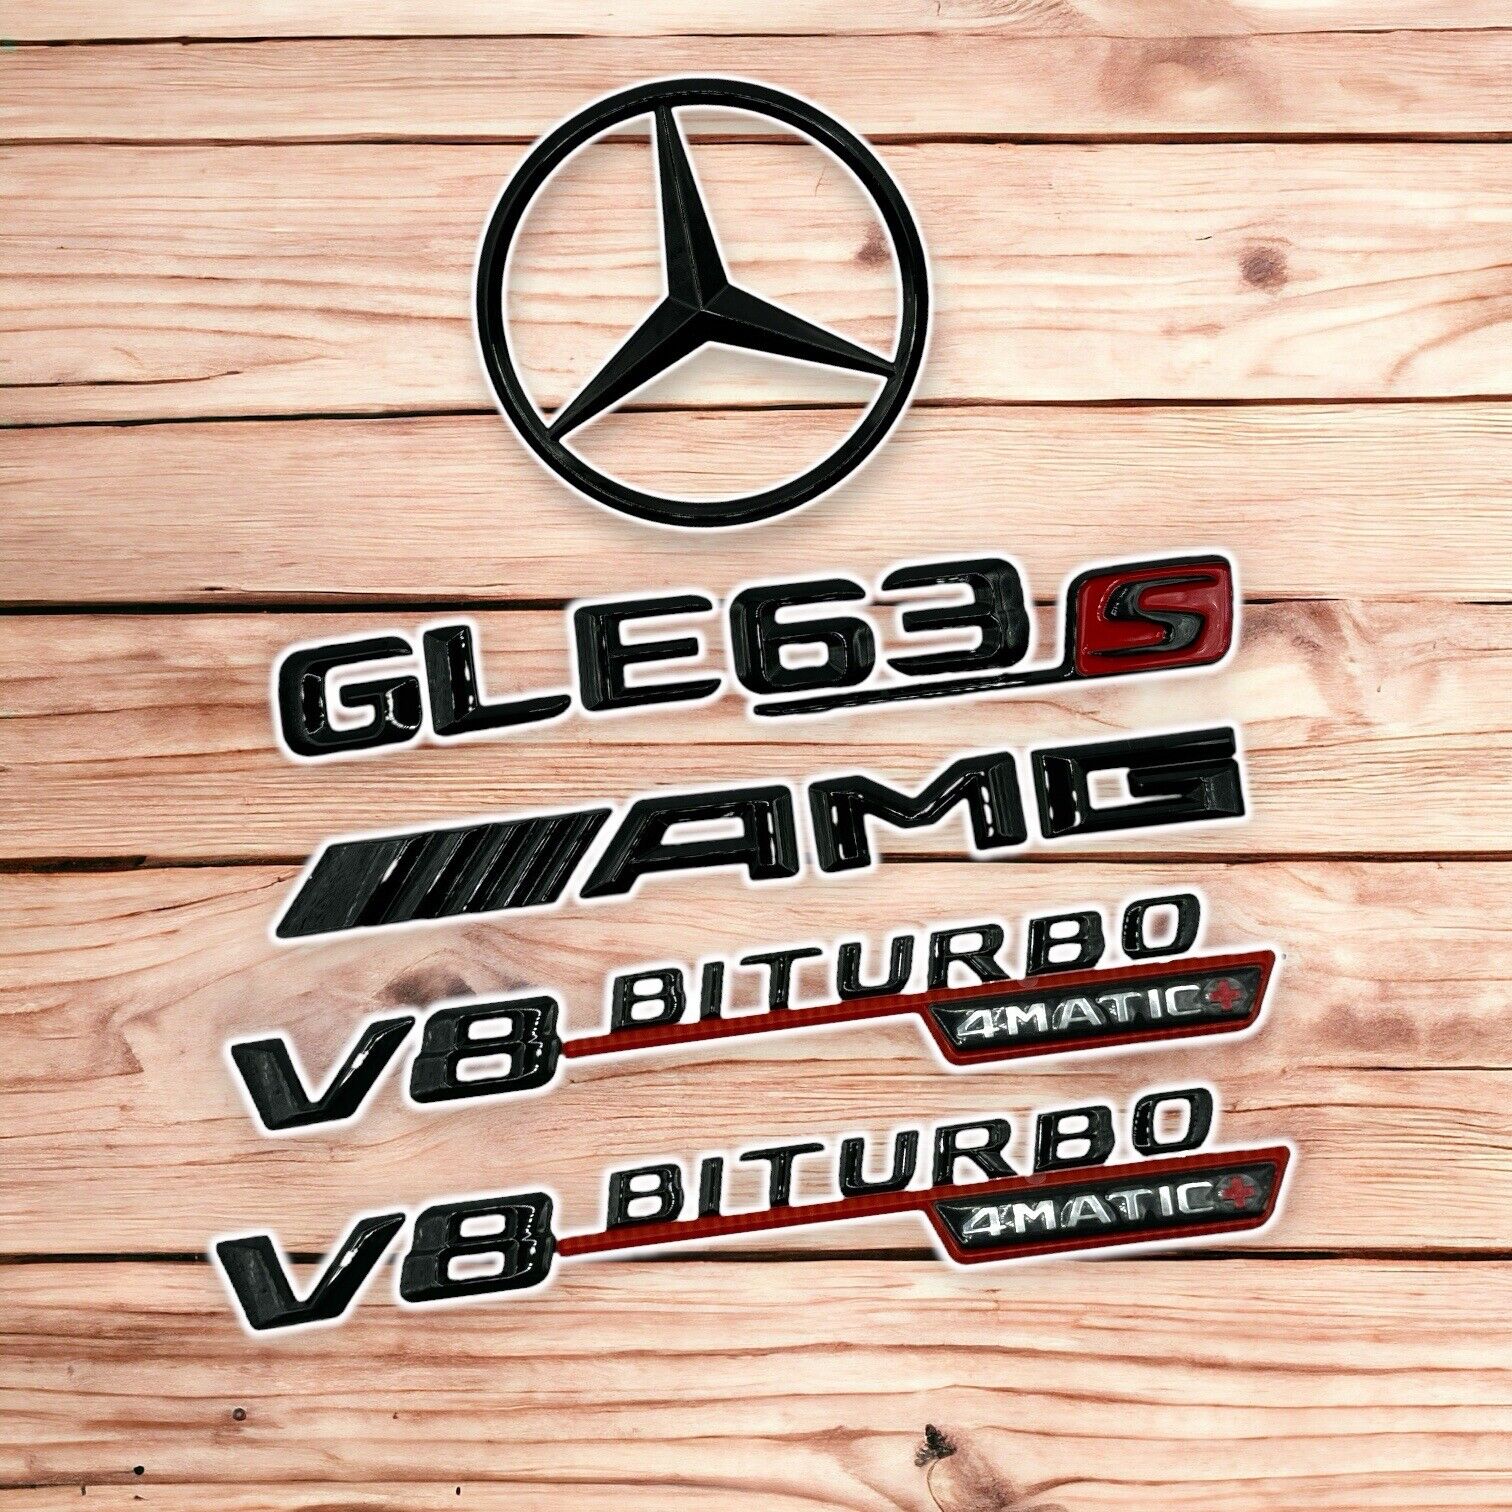 GLE63S SUV AMG V8 BITURBO Star Emblem Black Badge Combo Set Mercedes W166